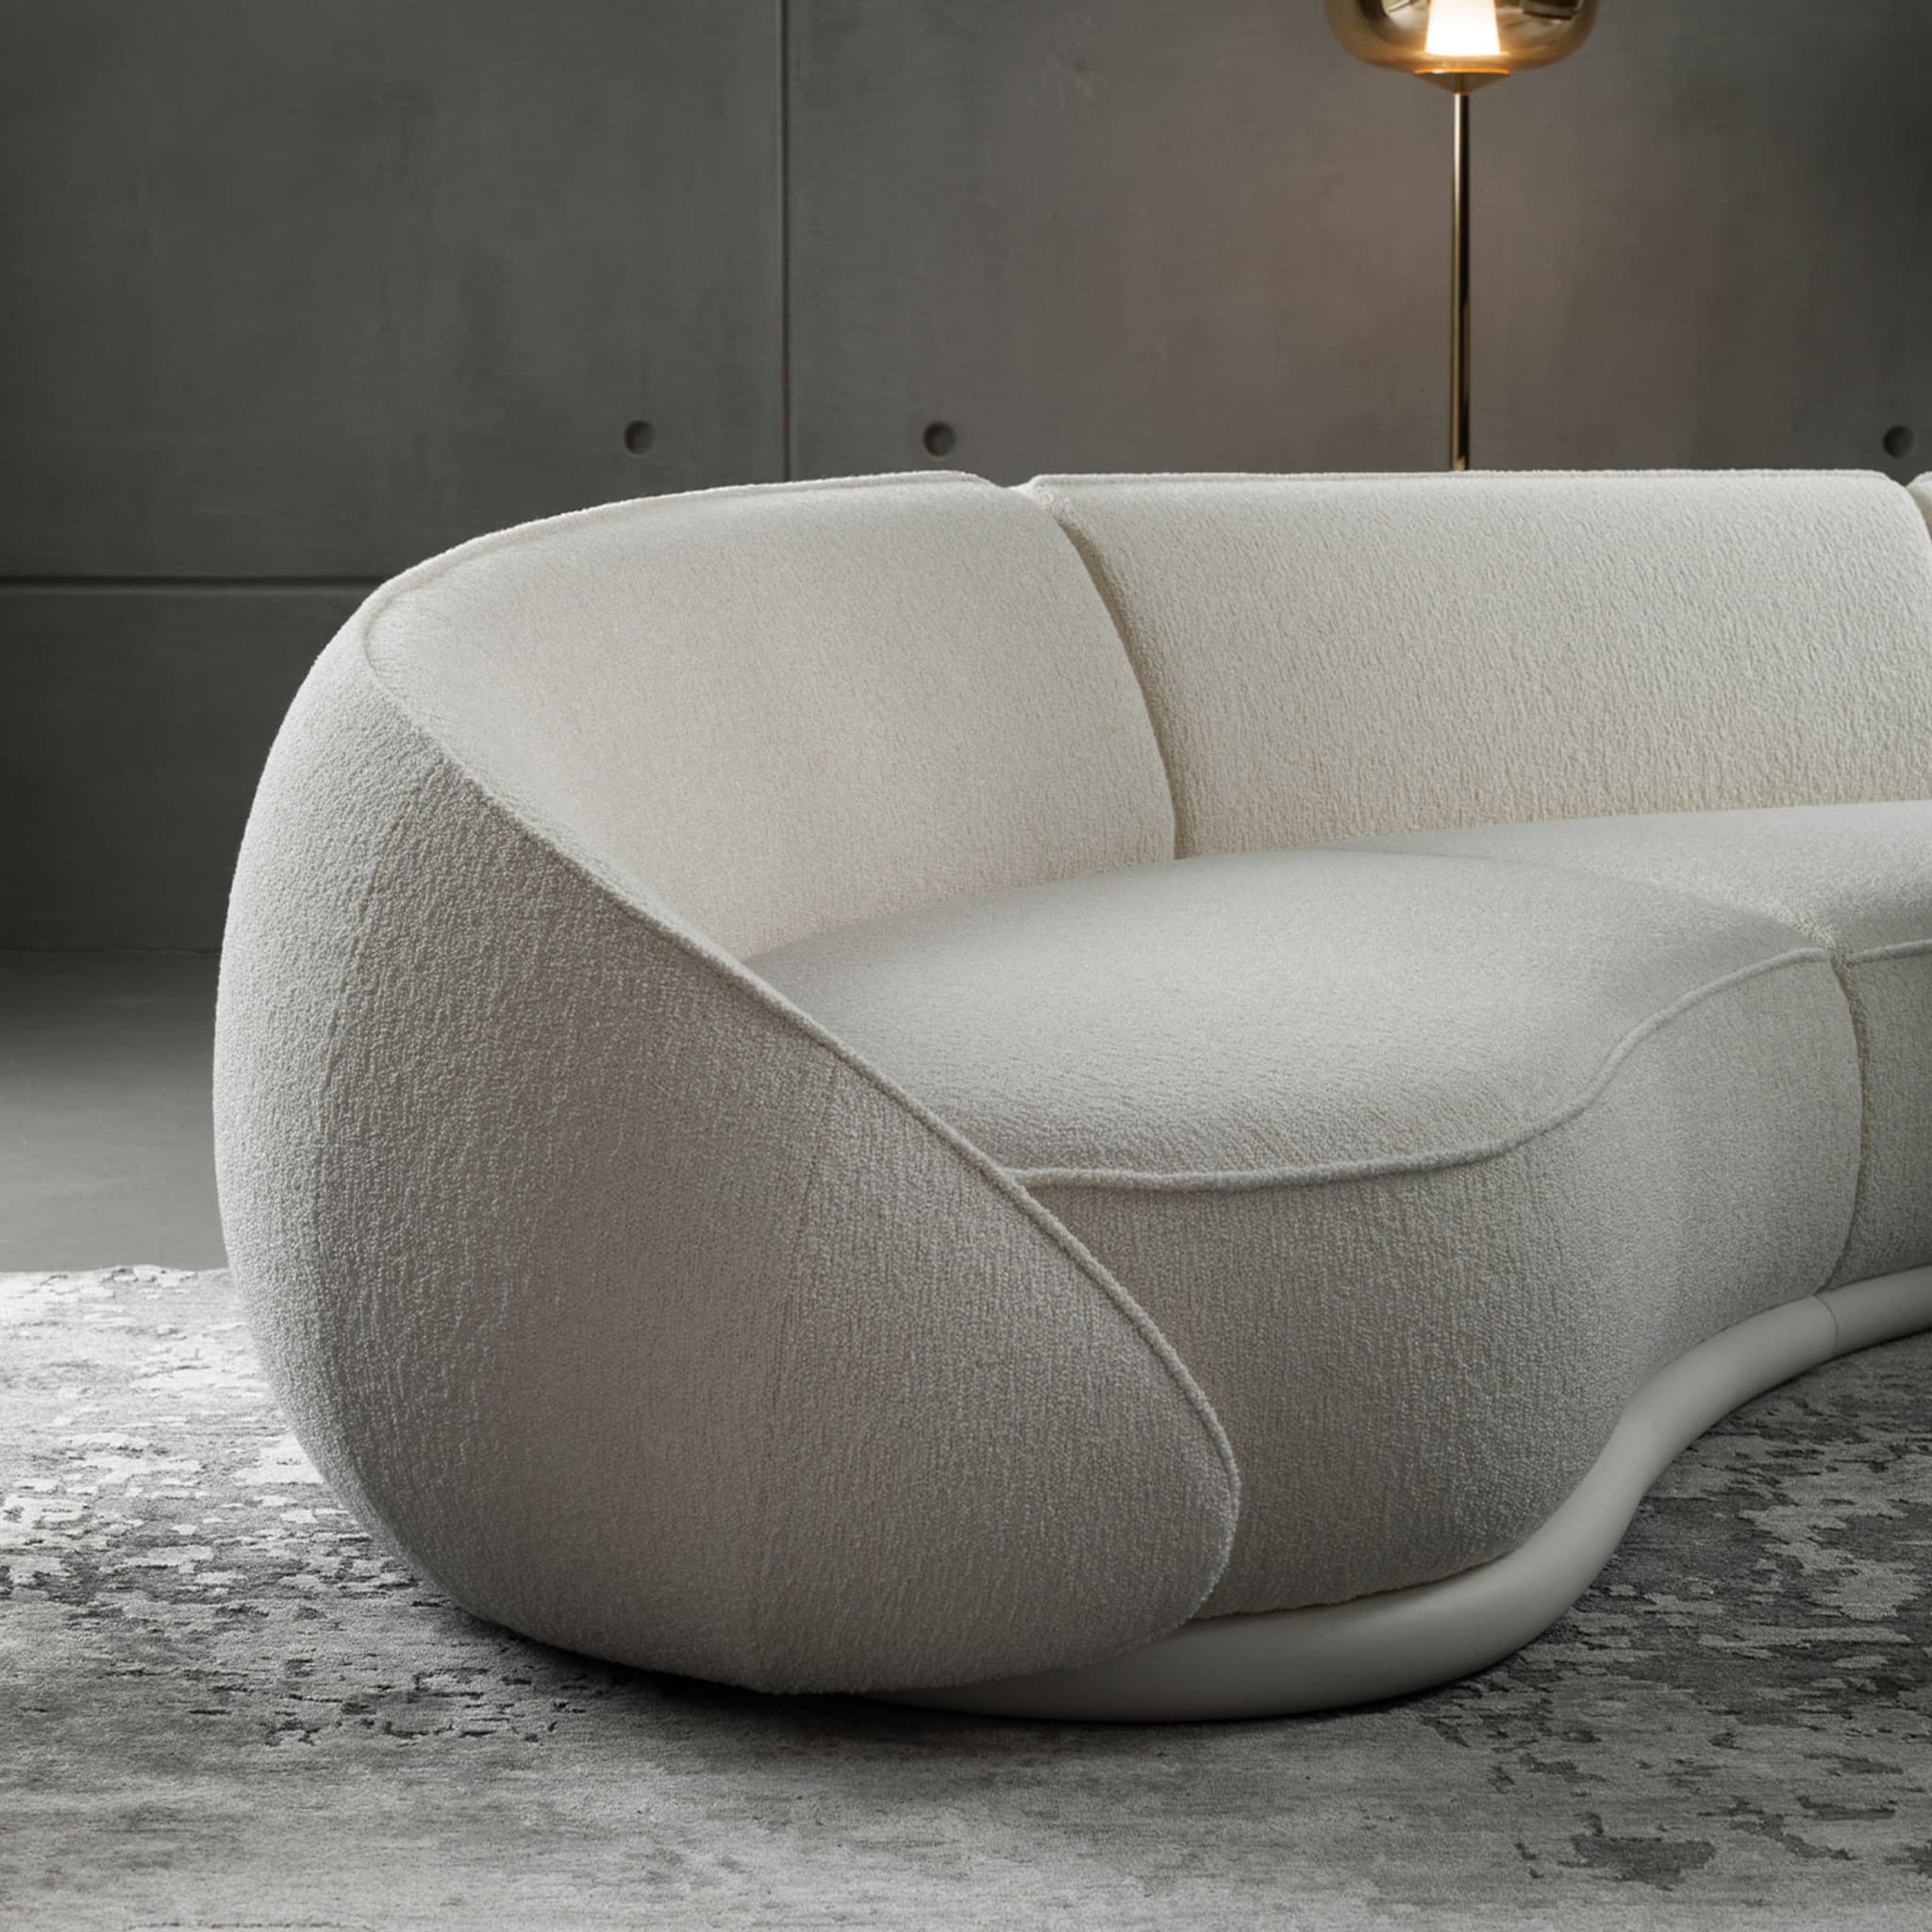 Abbracci 4-Module White Sofa by Lorenza Bozzoli - Alternative view 2